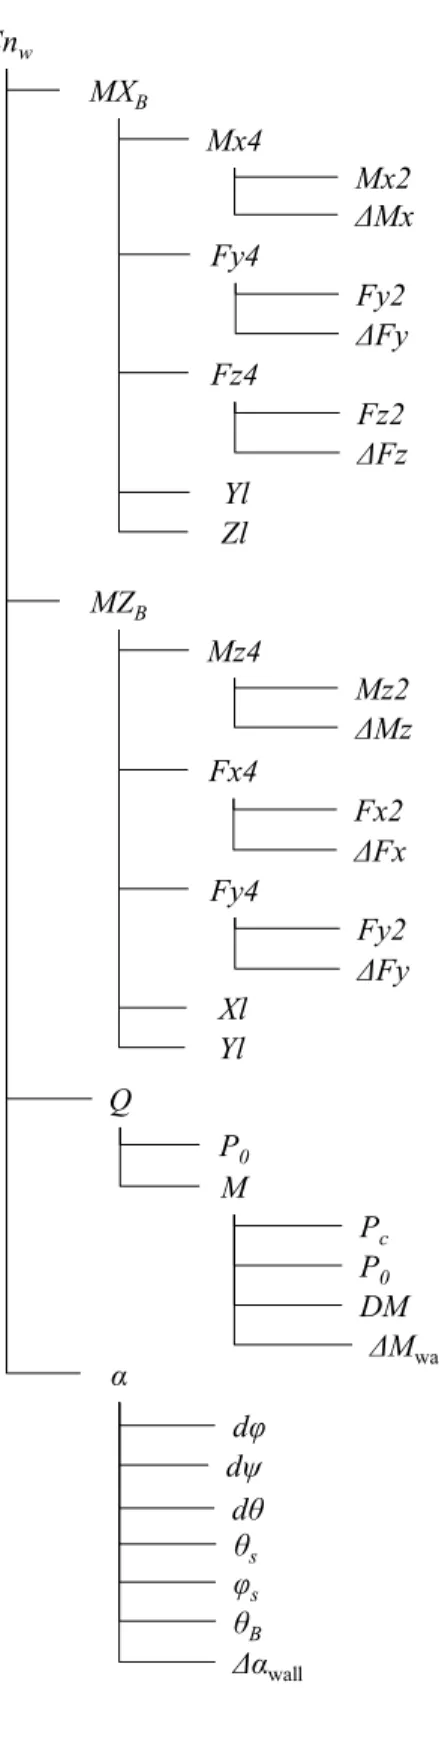 図 15  Cn w における親変数→子変数展開構 造MXB Mx4Q ΔMxMx2CnwP0MPcP0DMΔM wallFz4Fz2ΔFzdφdψdθαθsφsθBΔαwallFy4ΔFyFy2YlZlMZBMz4ΔMzMz2Fy4Fy2ΔFyFx4ΔFxFx2XlYl